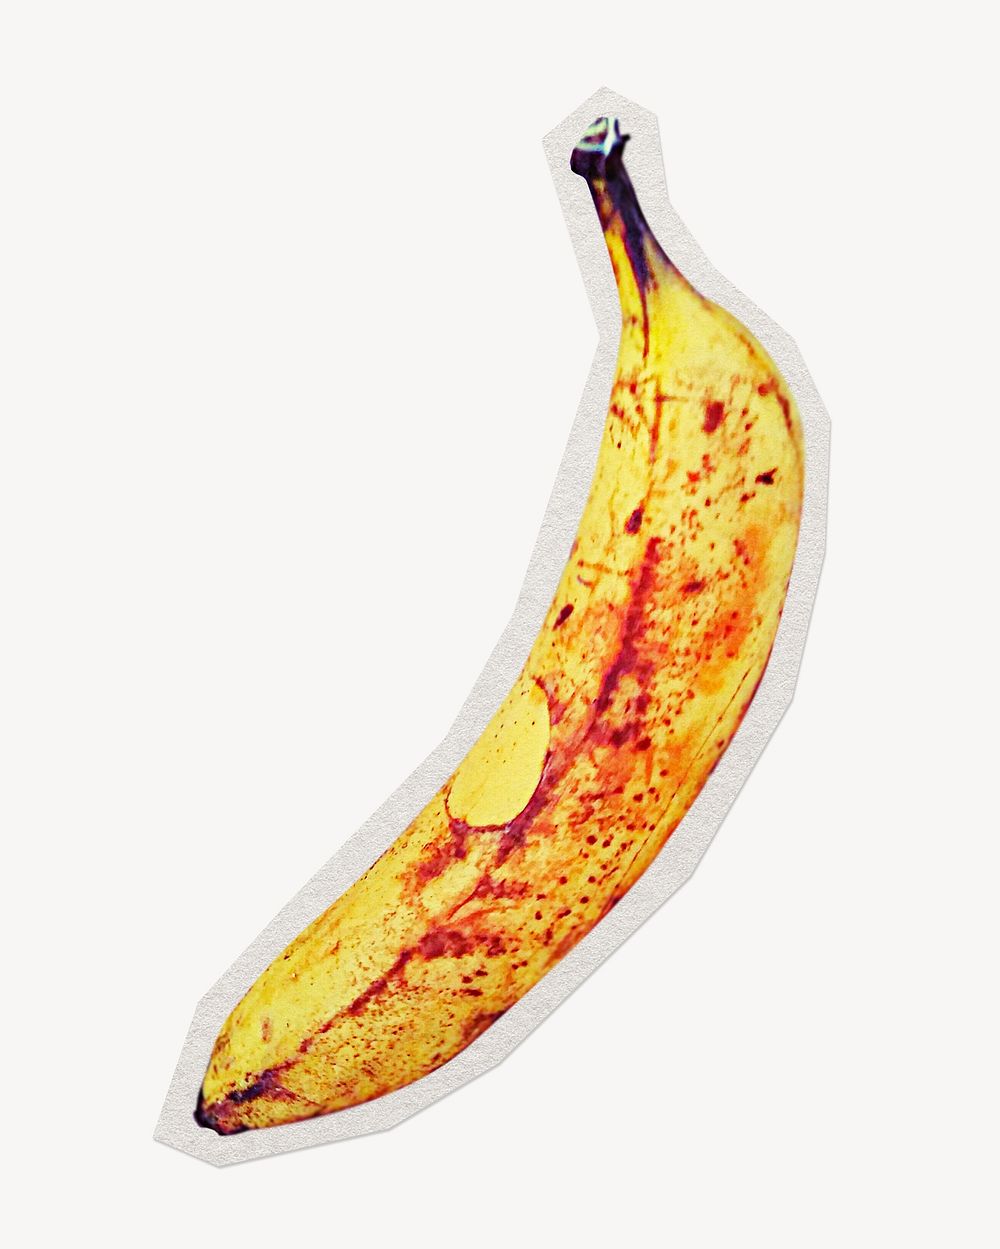 Ripe yellow banana  paper element with white border